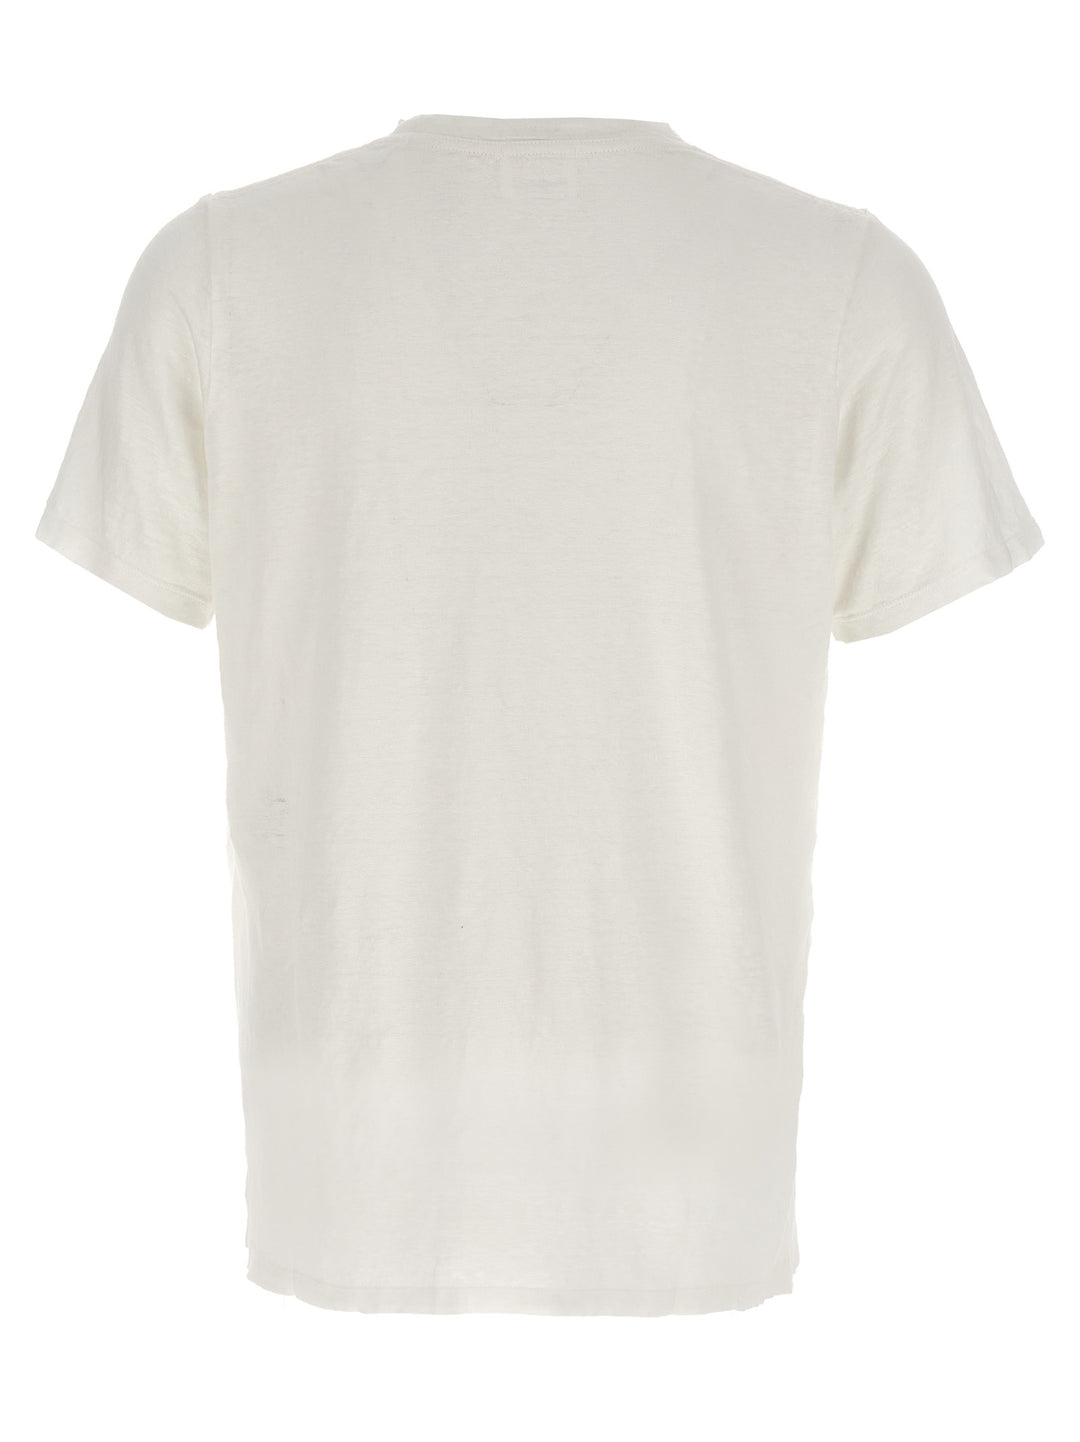 Karman T Shirt Bianco/Nero